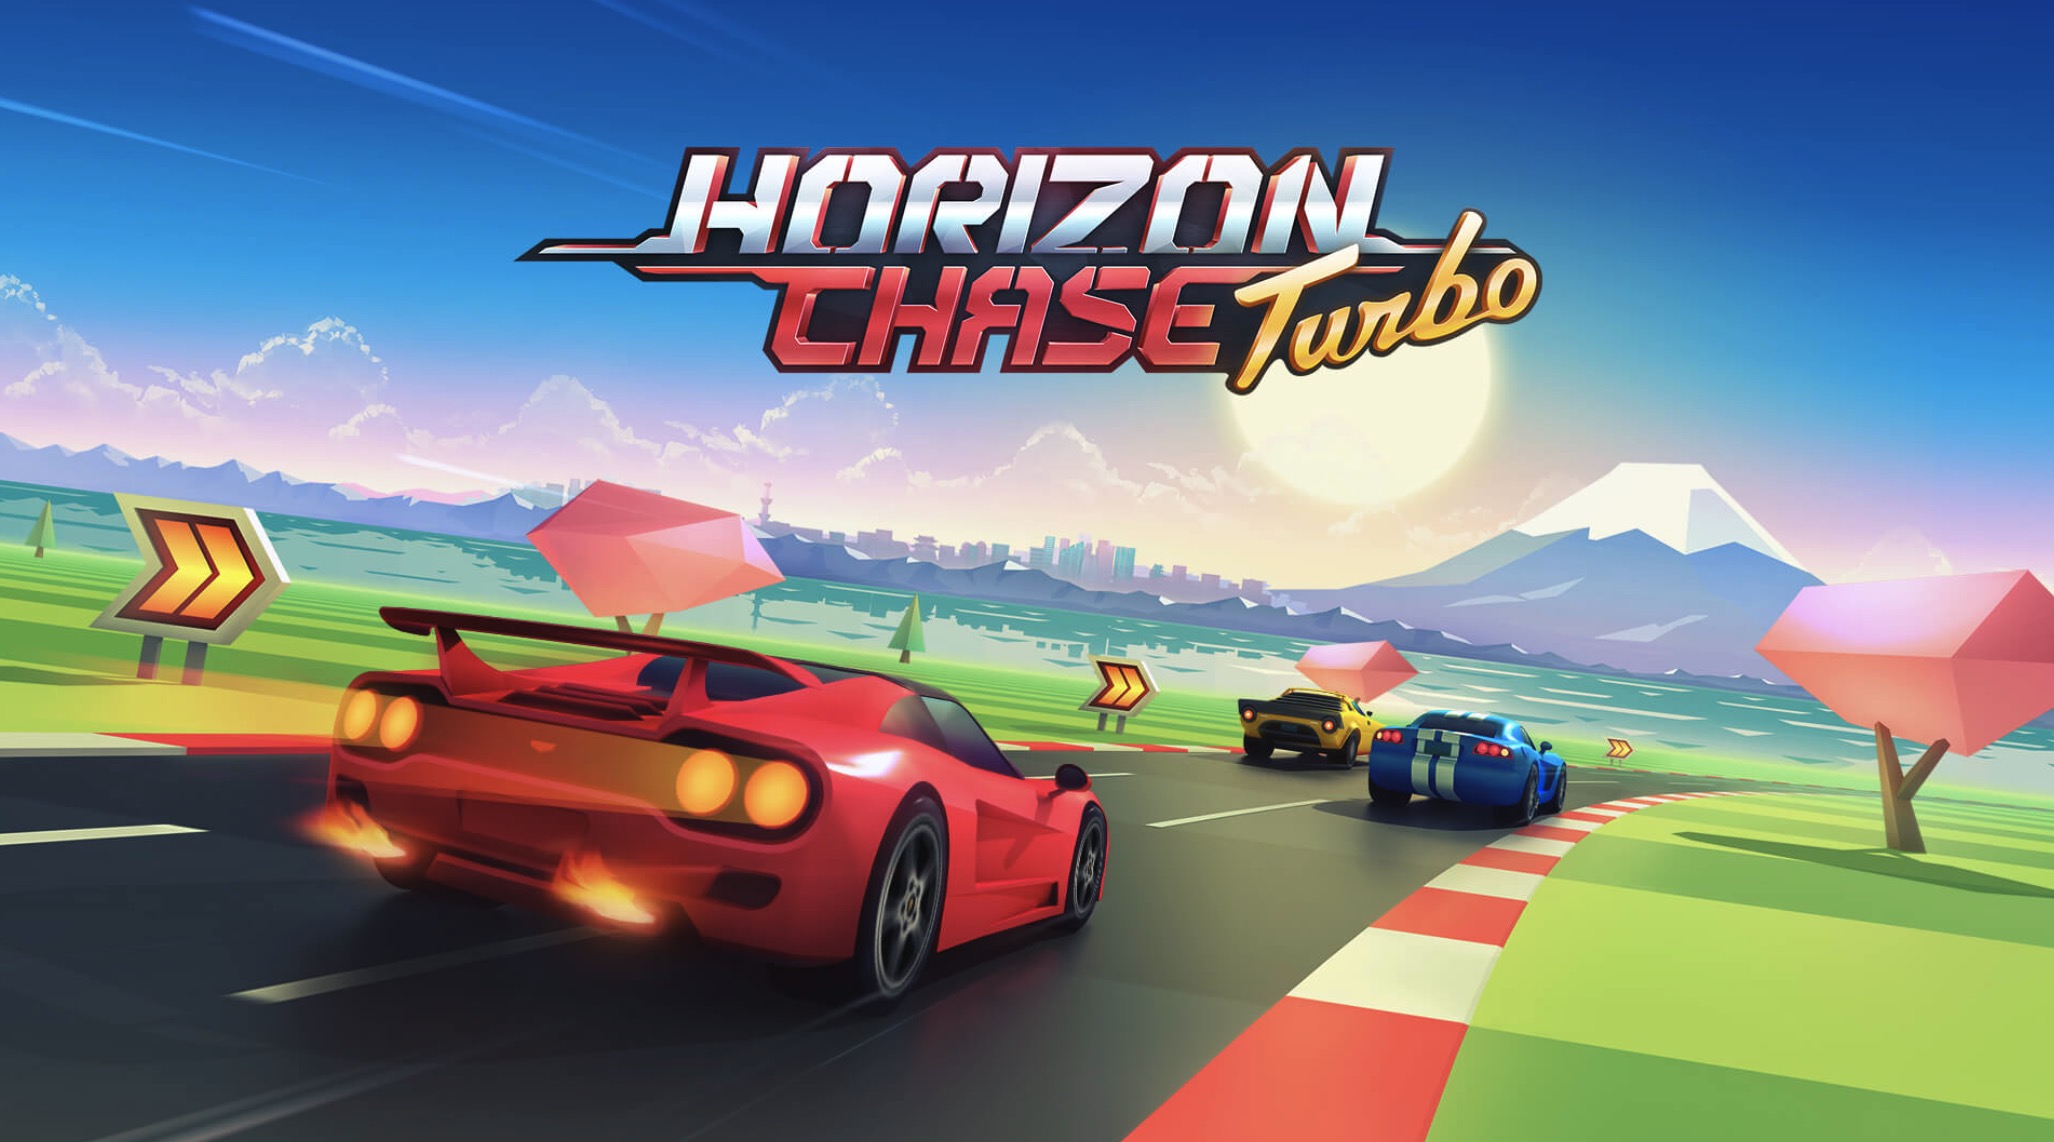 Horizon Chase Turbo – gratis su Epic